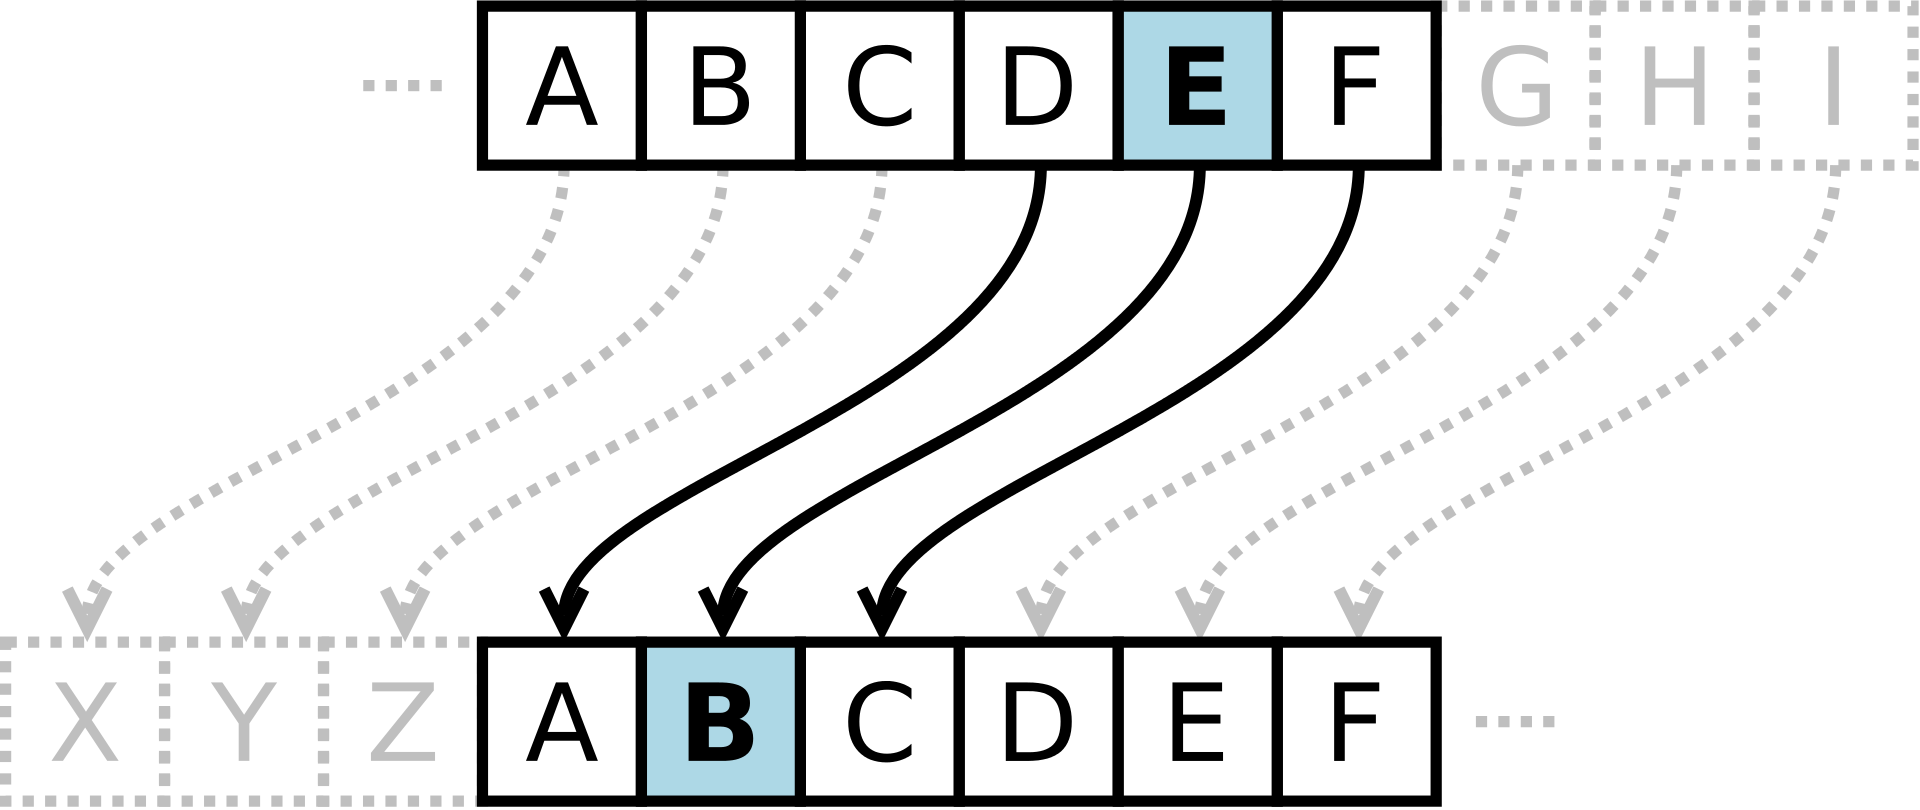 Introduction to Caesar Cipher Algorithm